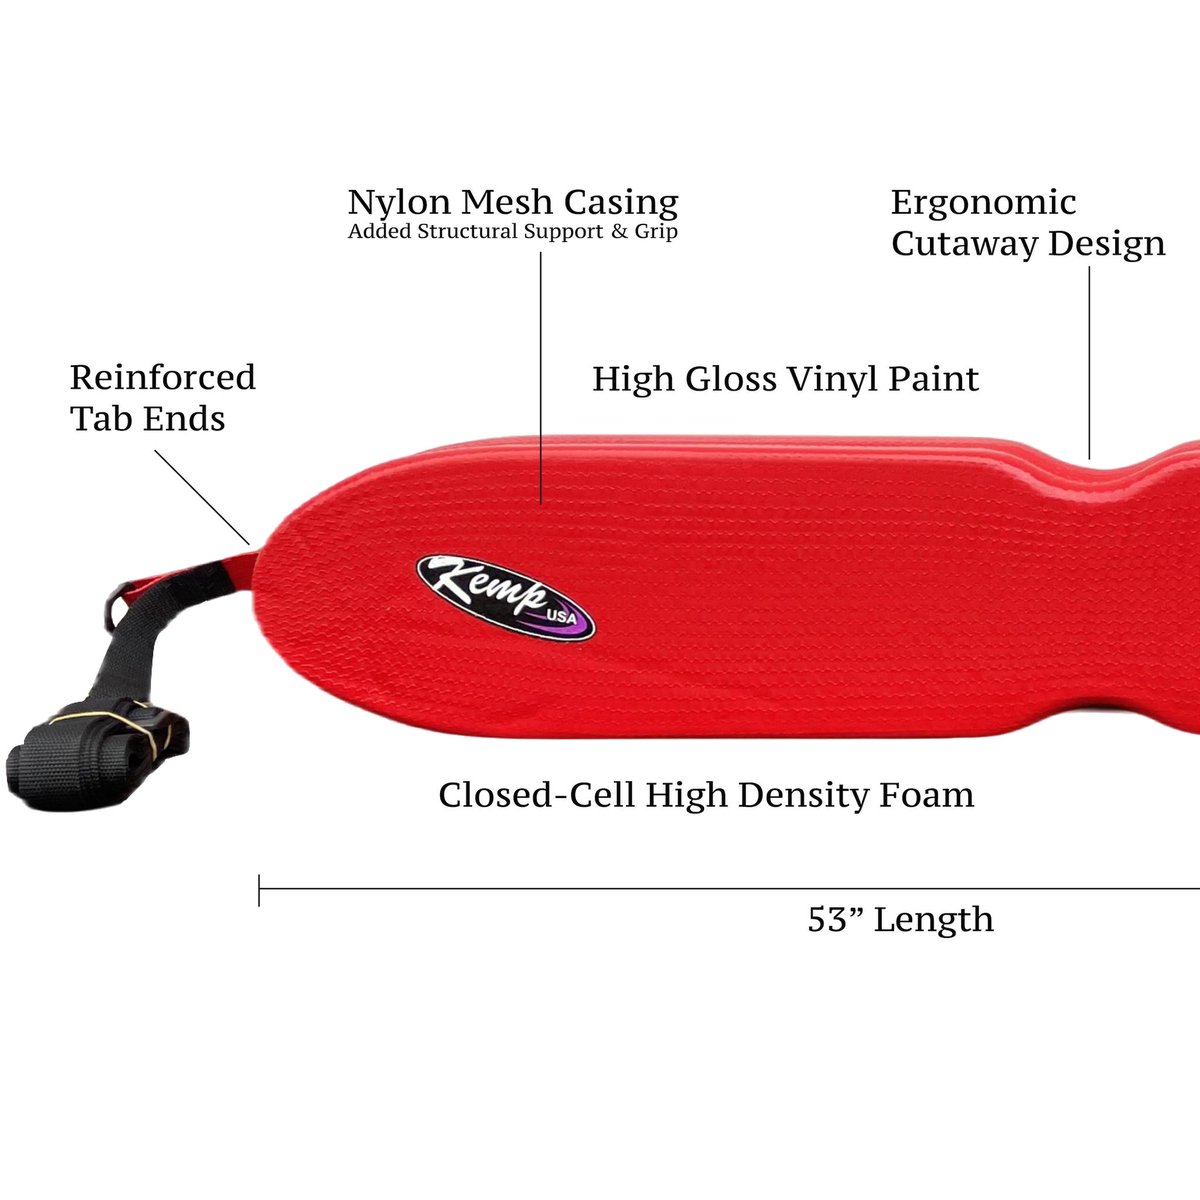 Get this premium newly designed ergonomic 53' long mesh rescue tube by Kemp USA.
amazon.com/dp/B0BVGMYPJQ?…